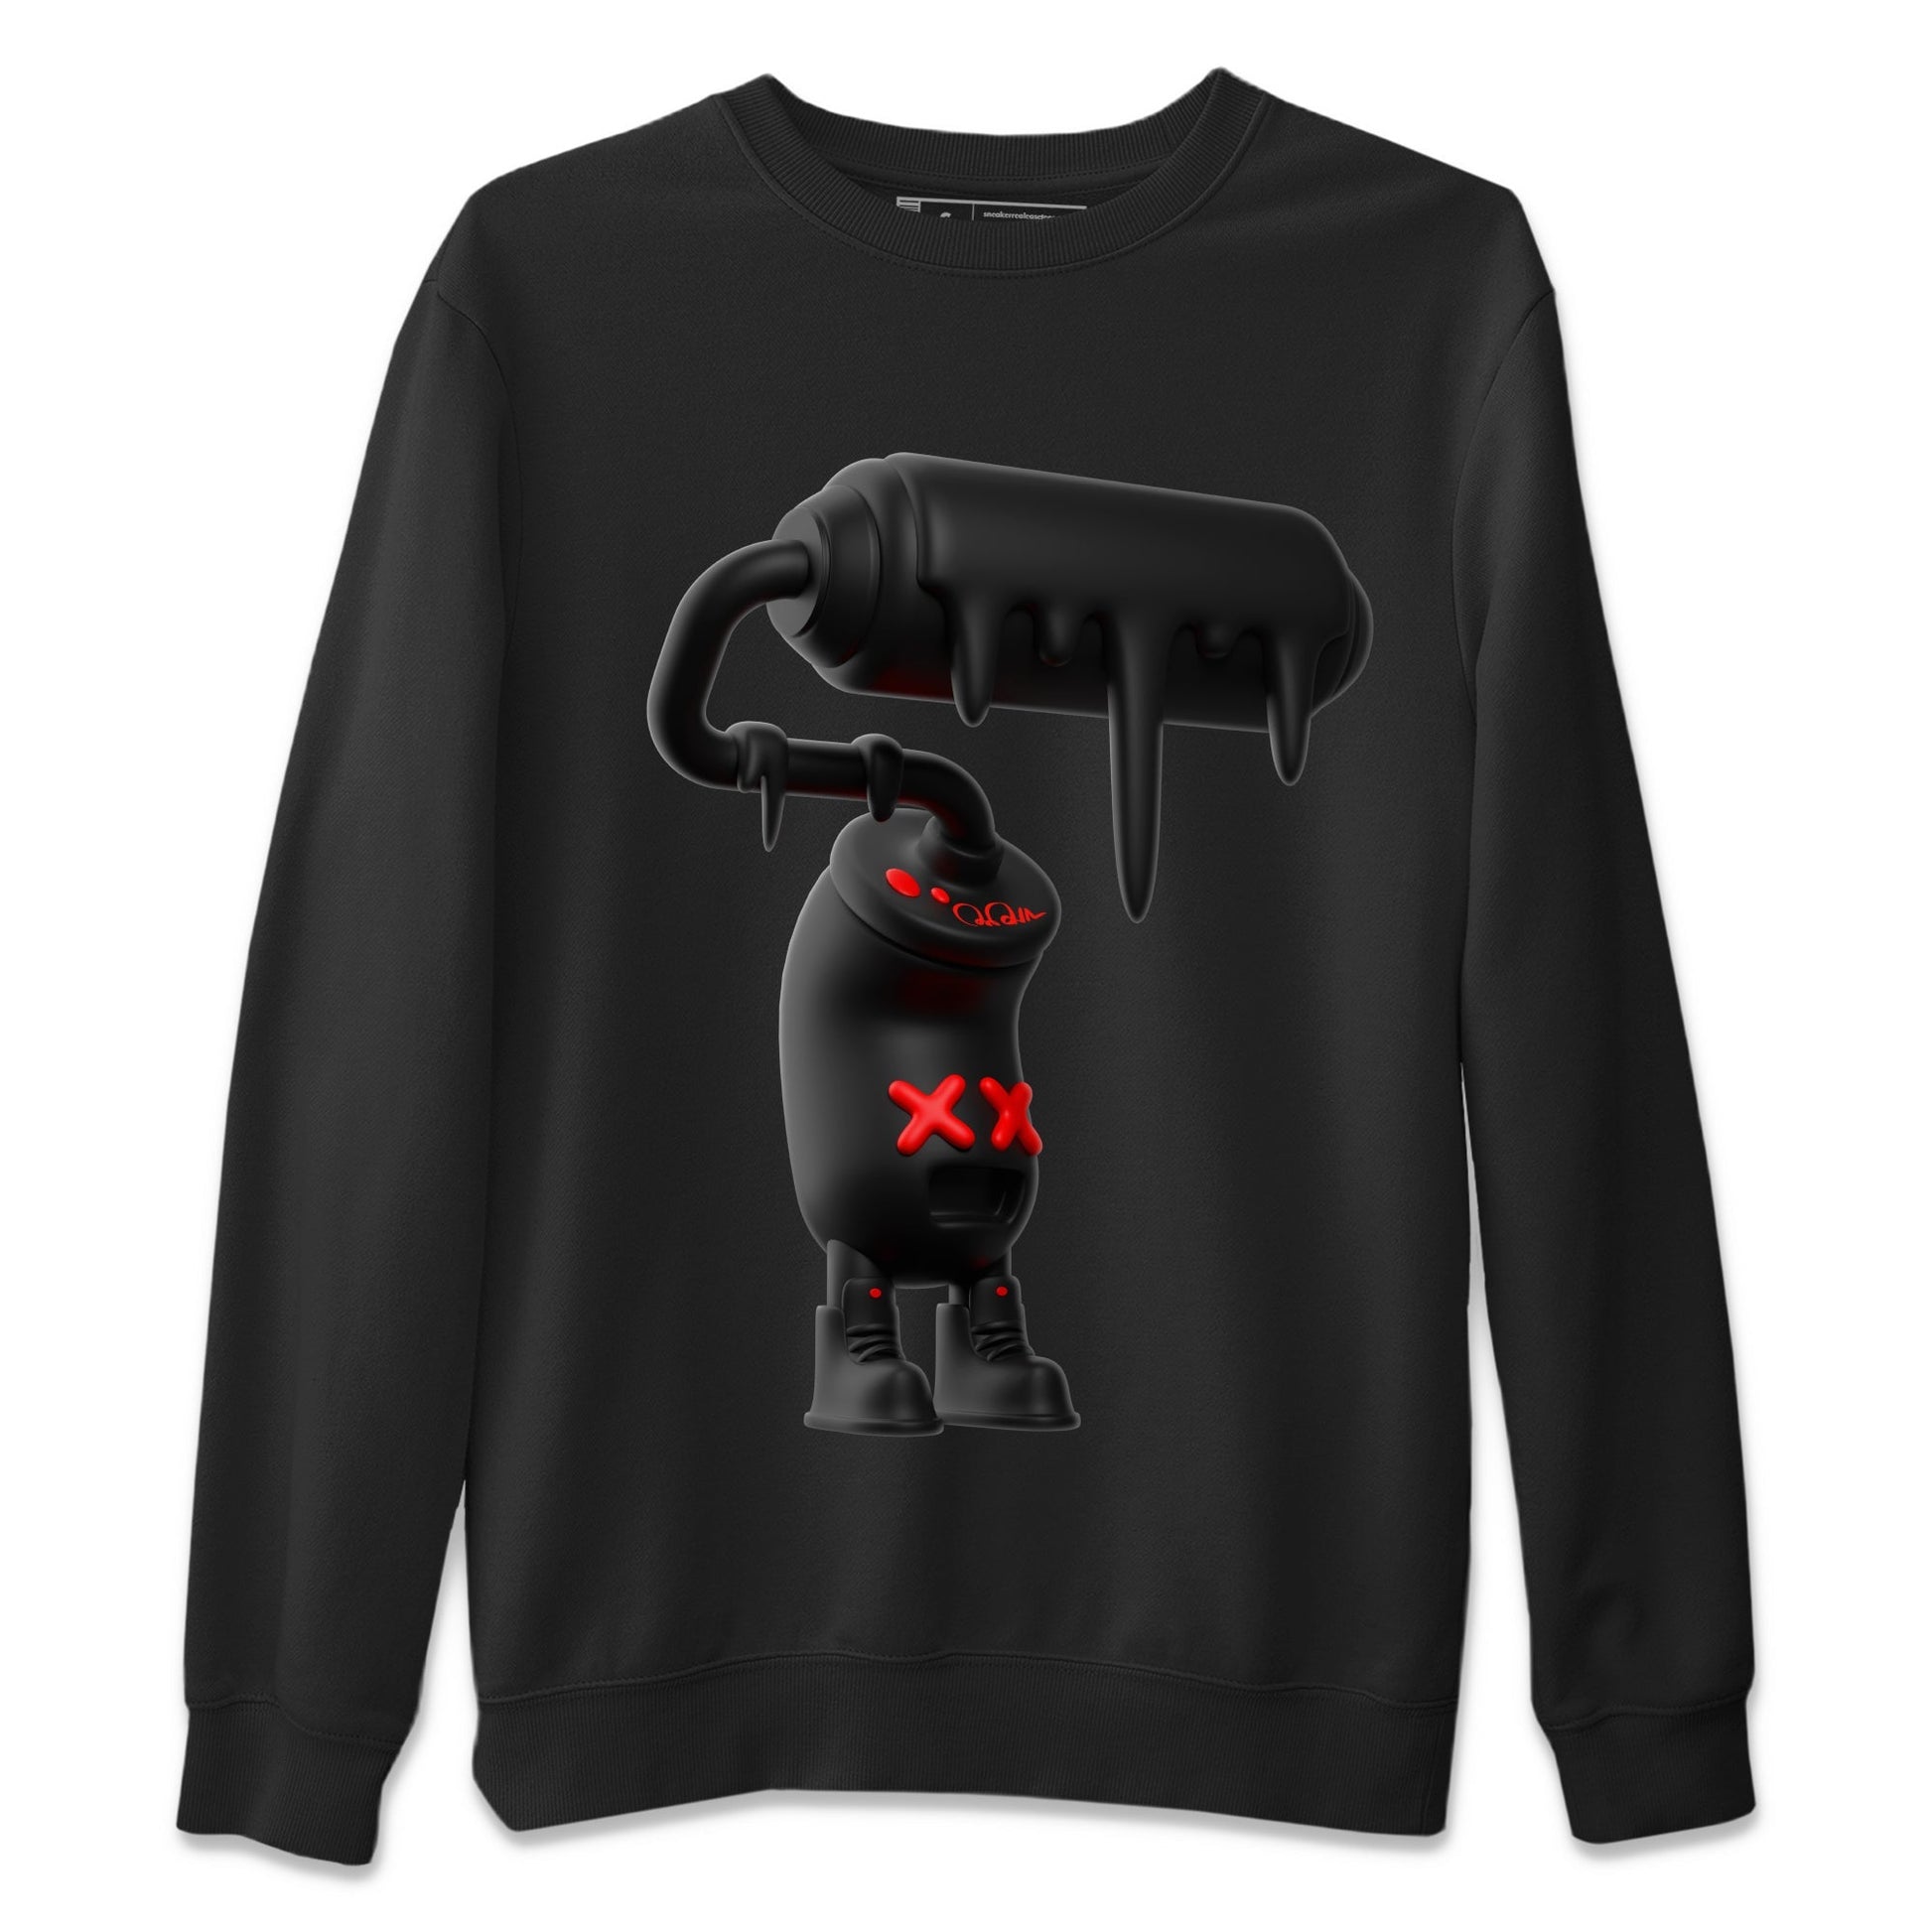 Yeezy 350 Bred shirt to match jordans 3D Paint Roller Streetwear Sneaker Shirt Adidas Yeezy Boost V2 350 Bred Drip Gear Zone Sneaker Matching Clothing Unisex Black 2 T-Shirt